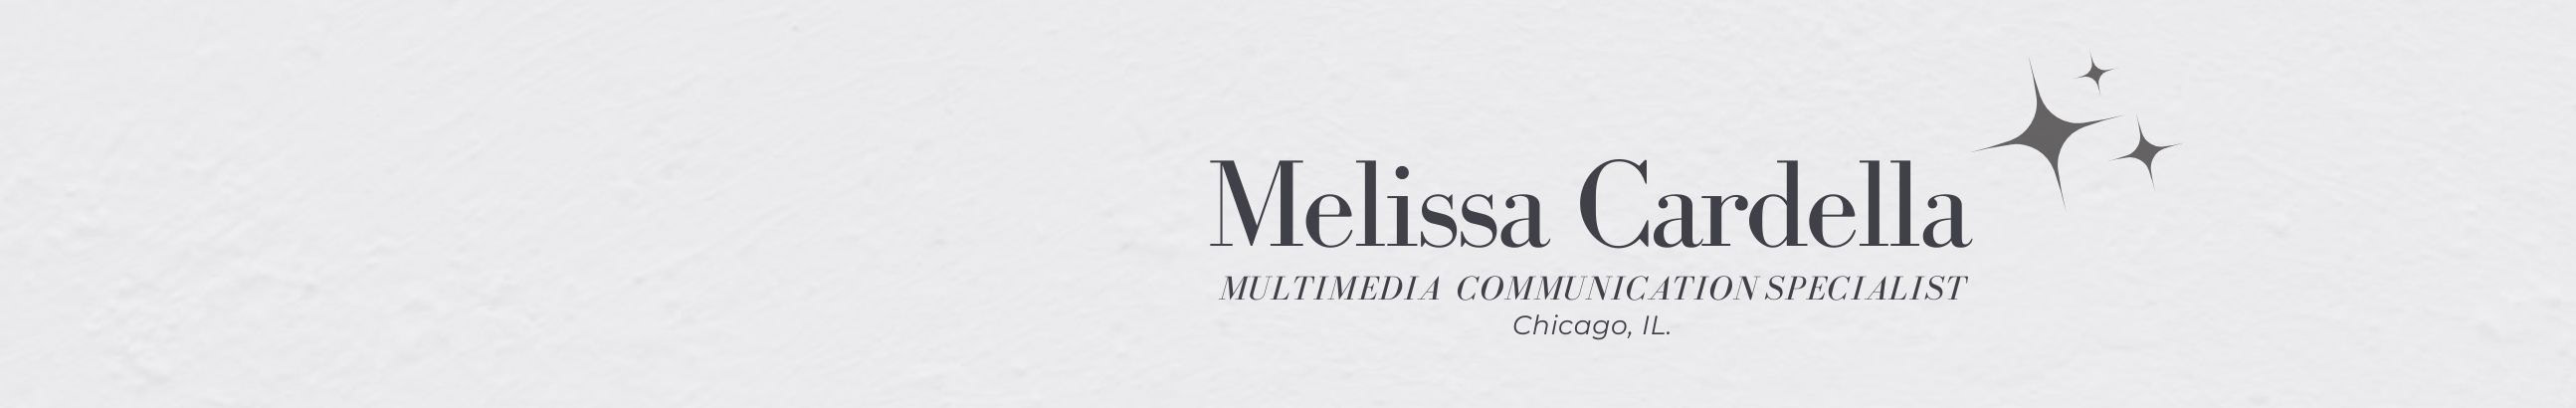 Profielbanner van Melissa Cardella